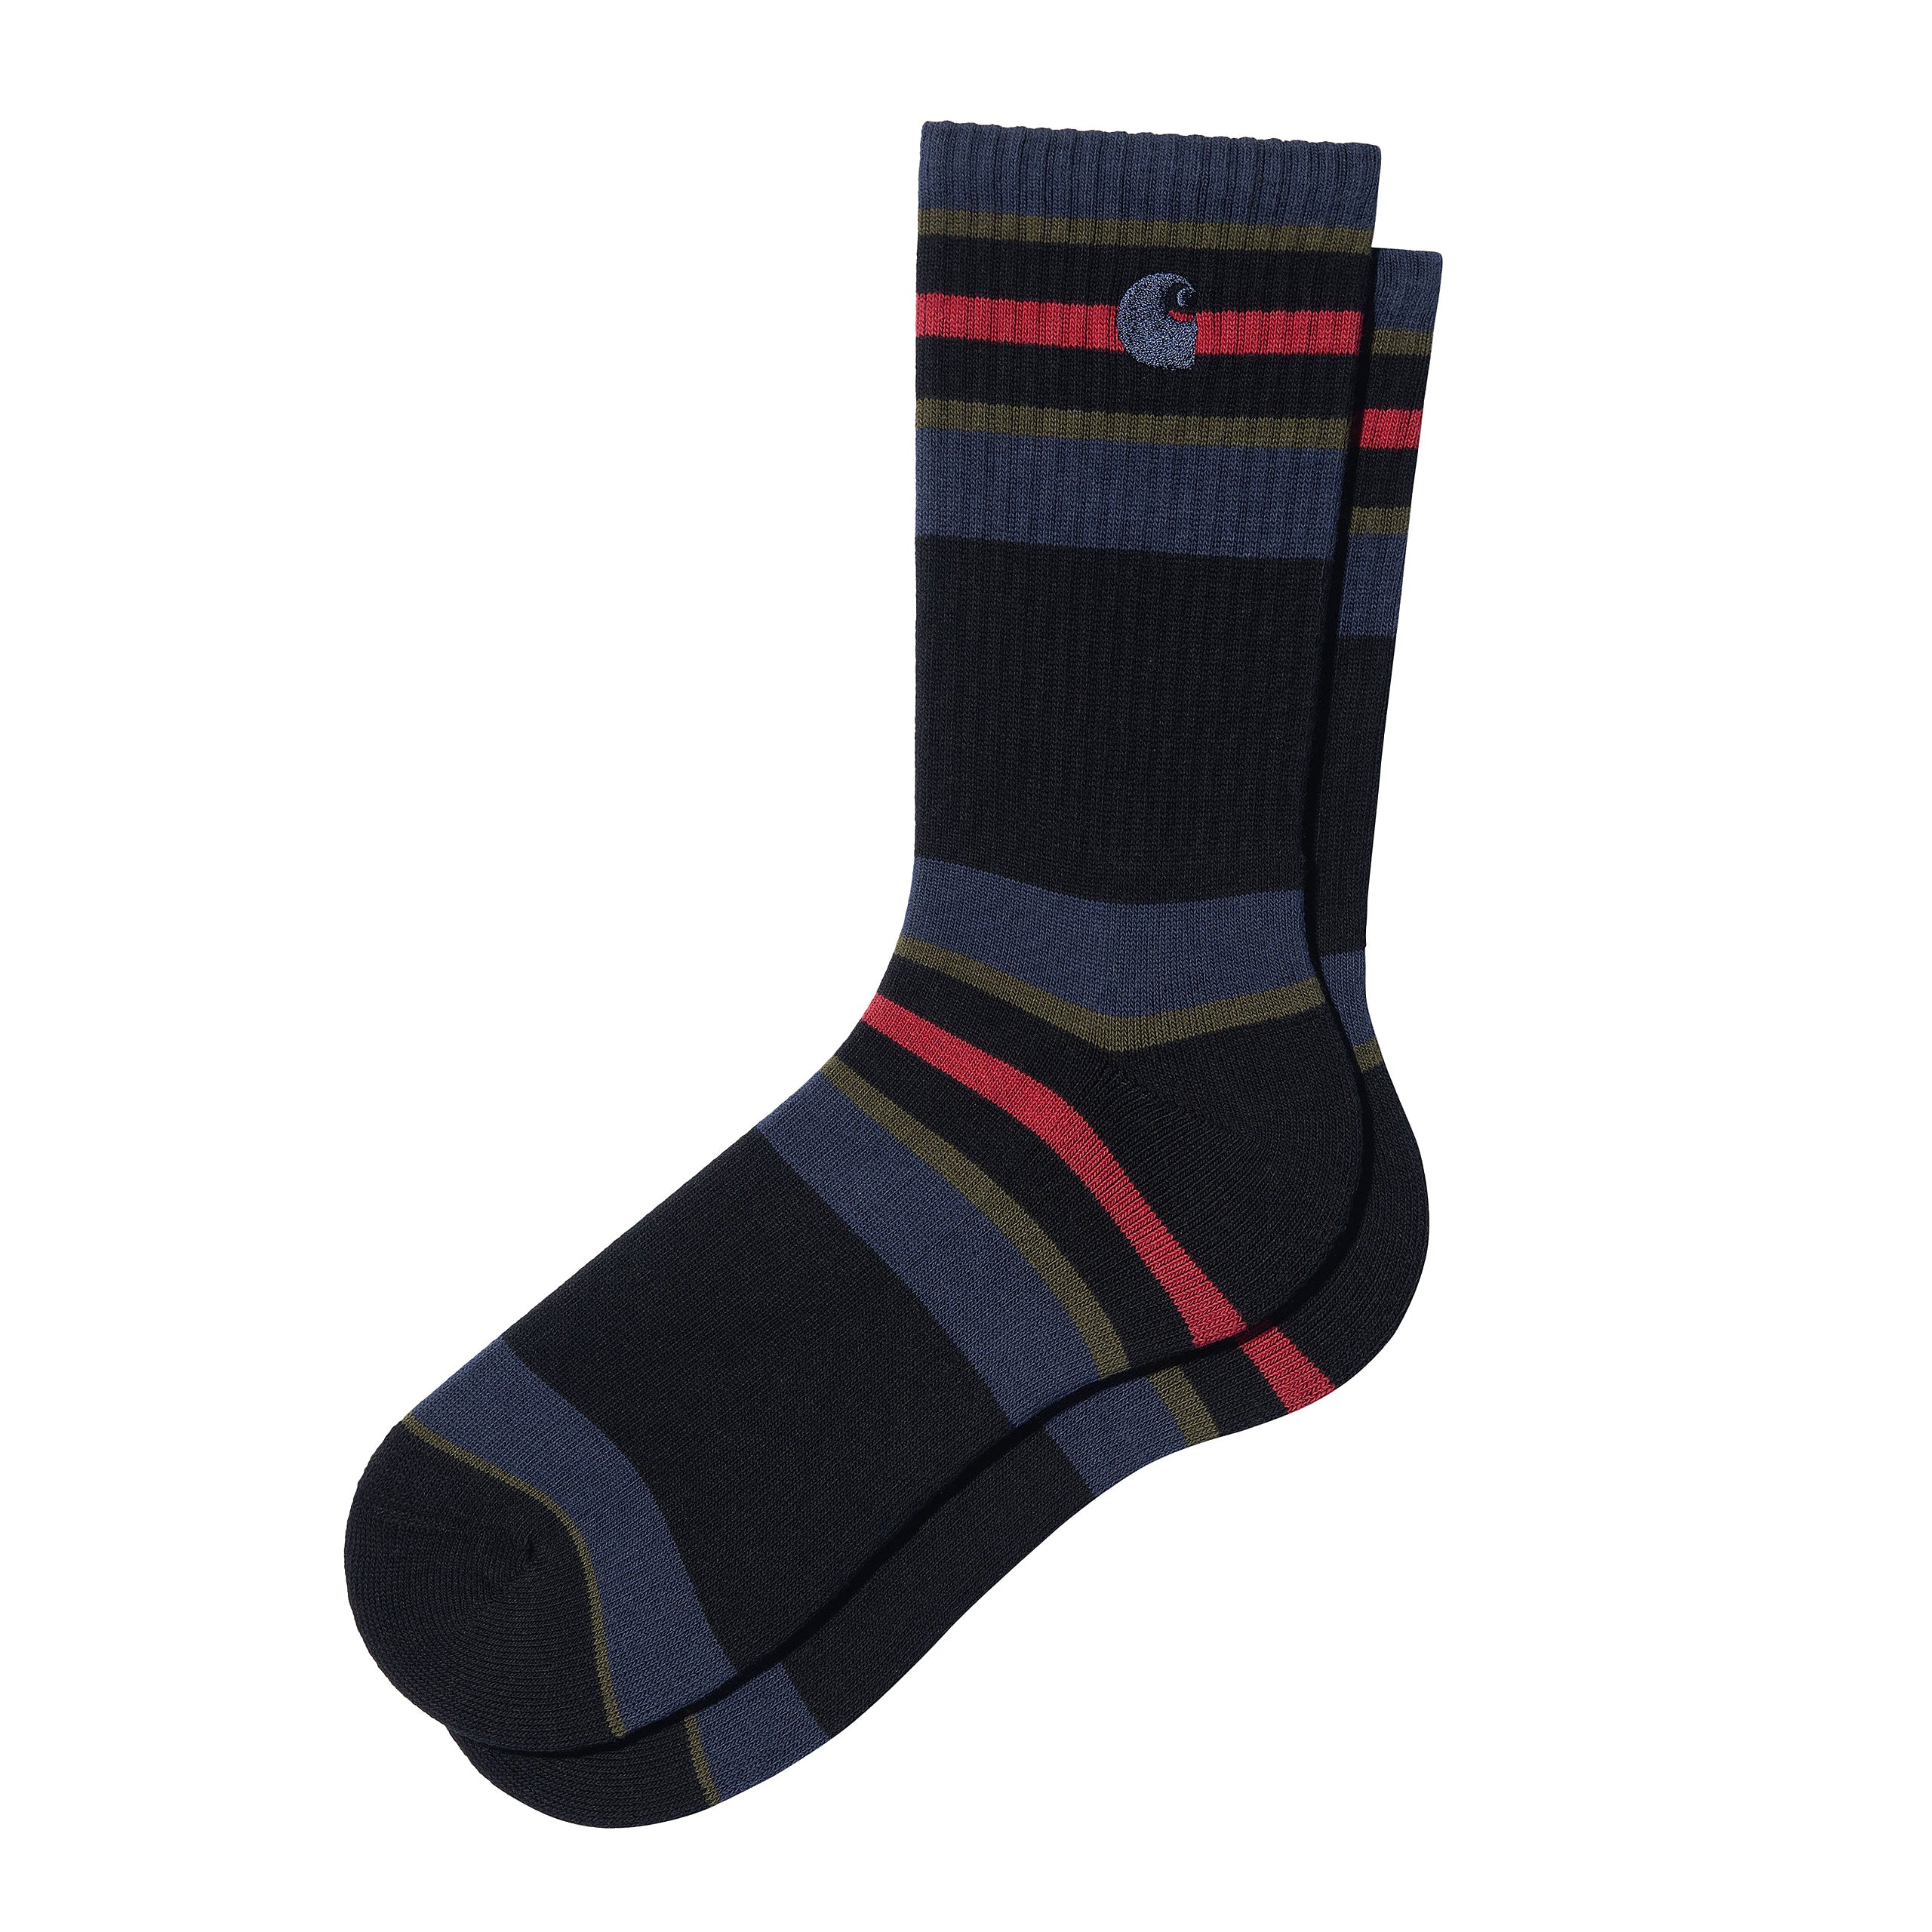 Carhartt WIP Oregon Socks - Starco Stripe/Black